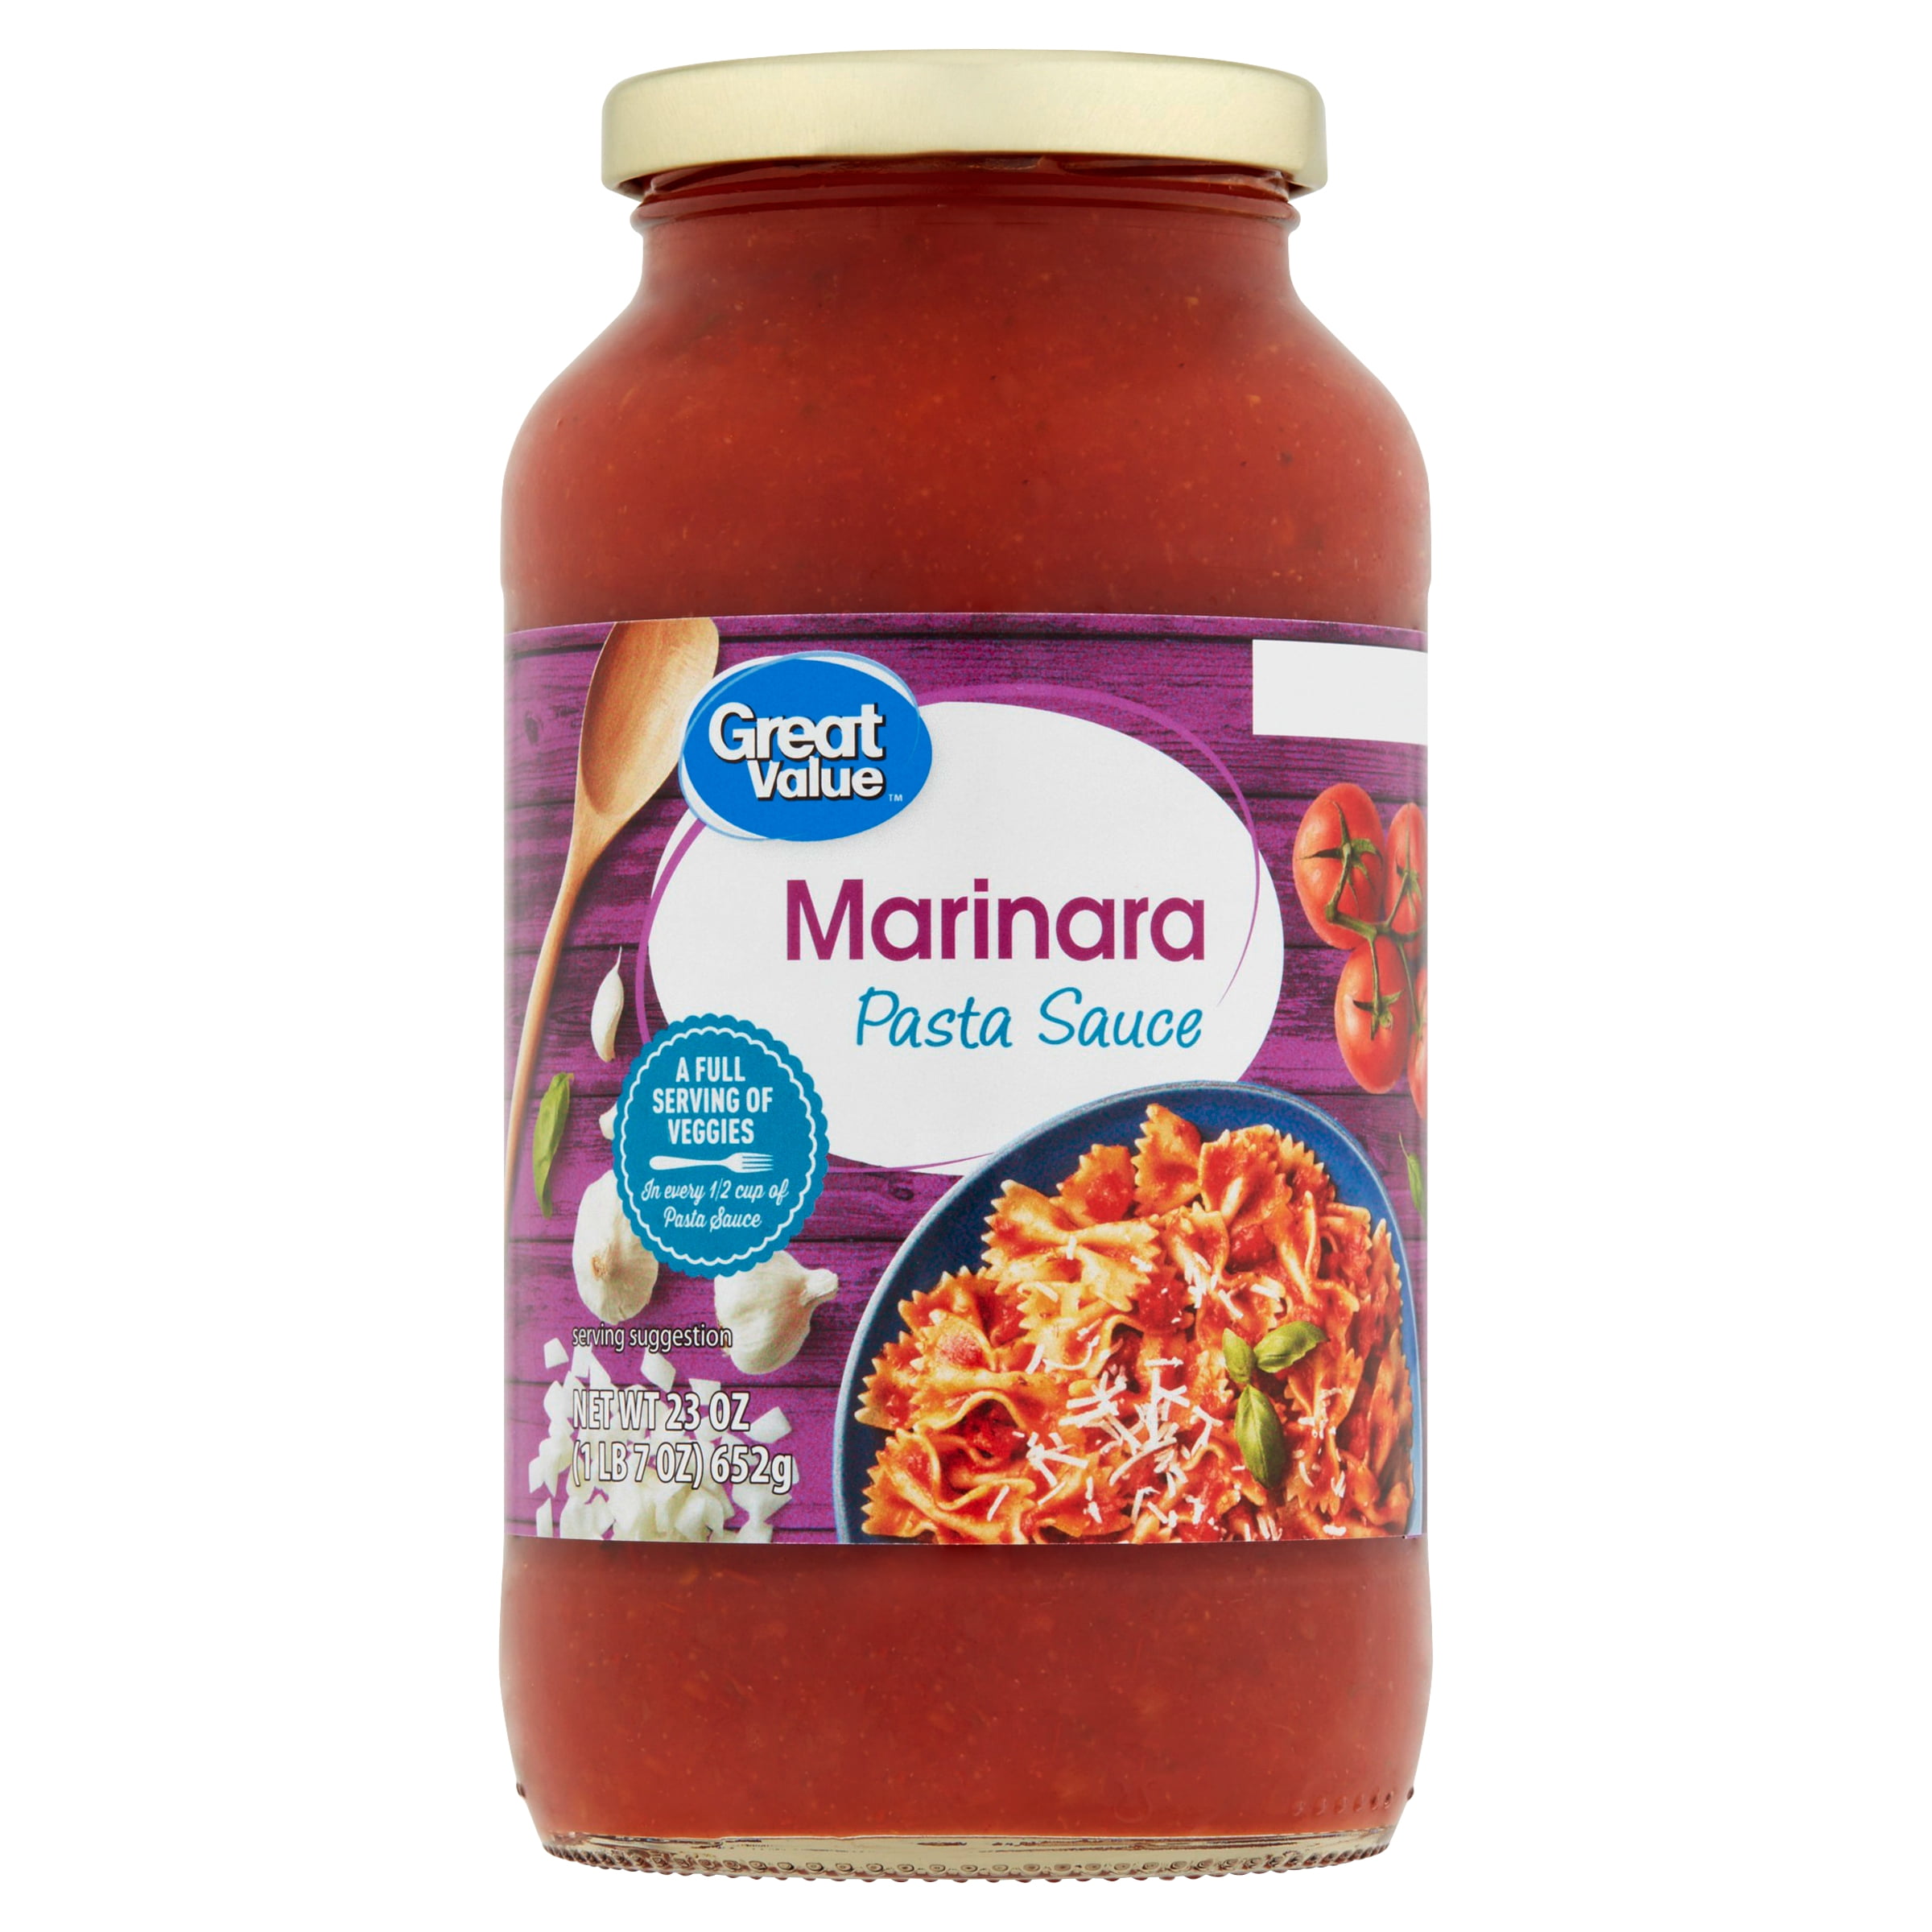 Great Value Marinara Pasta Sauce, 23 oz